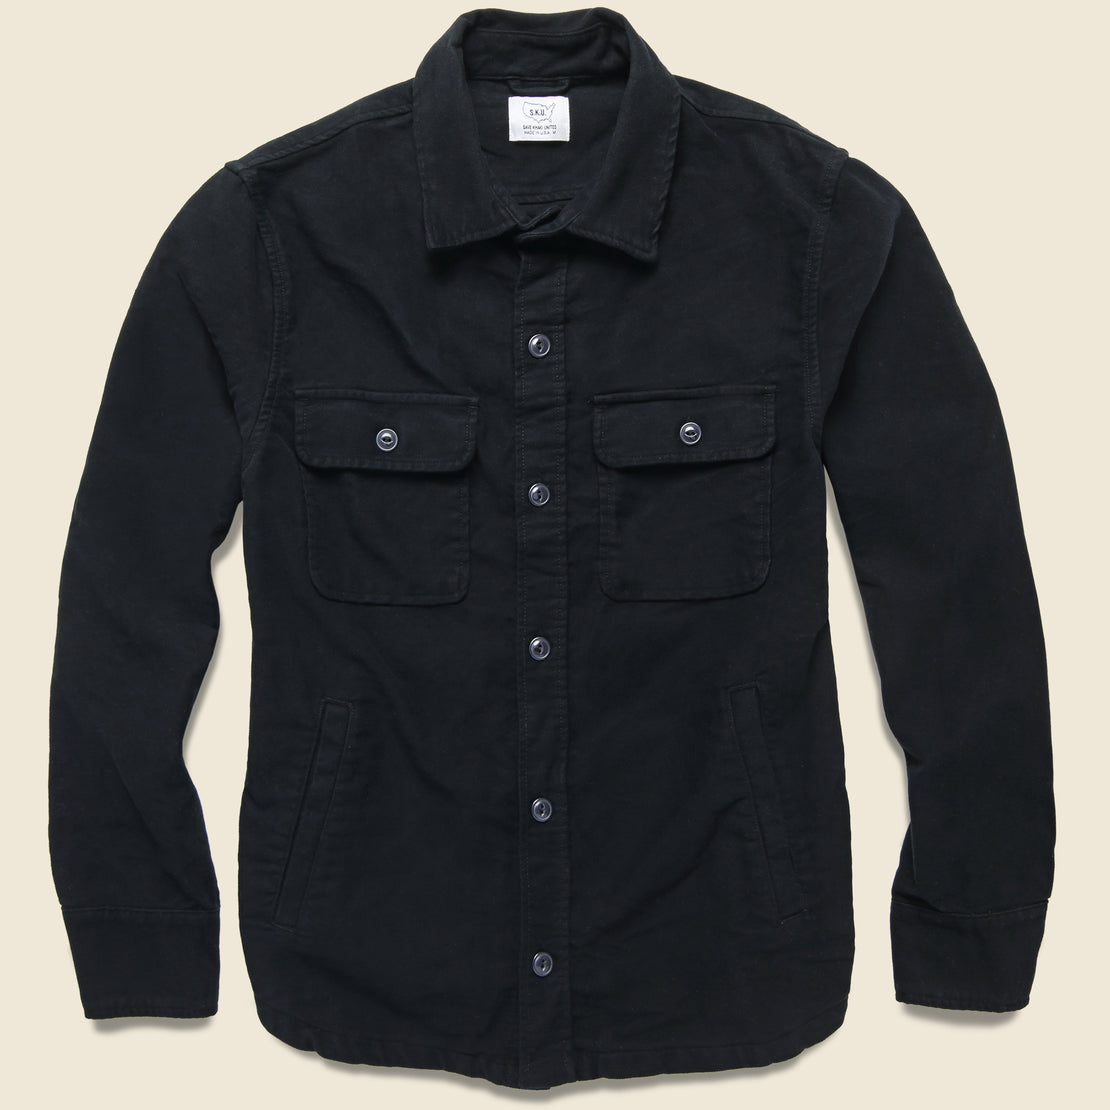 Save Khaki Moleskin CPO Jacket - Black